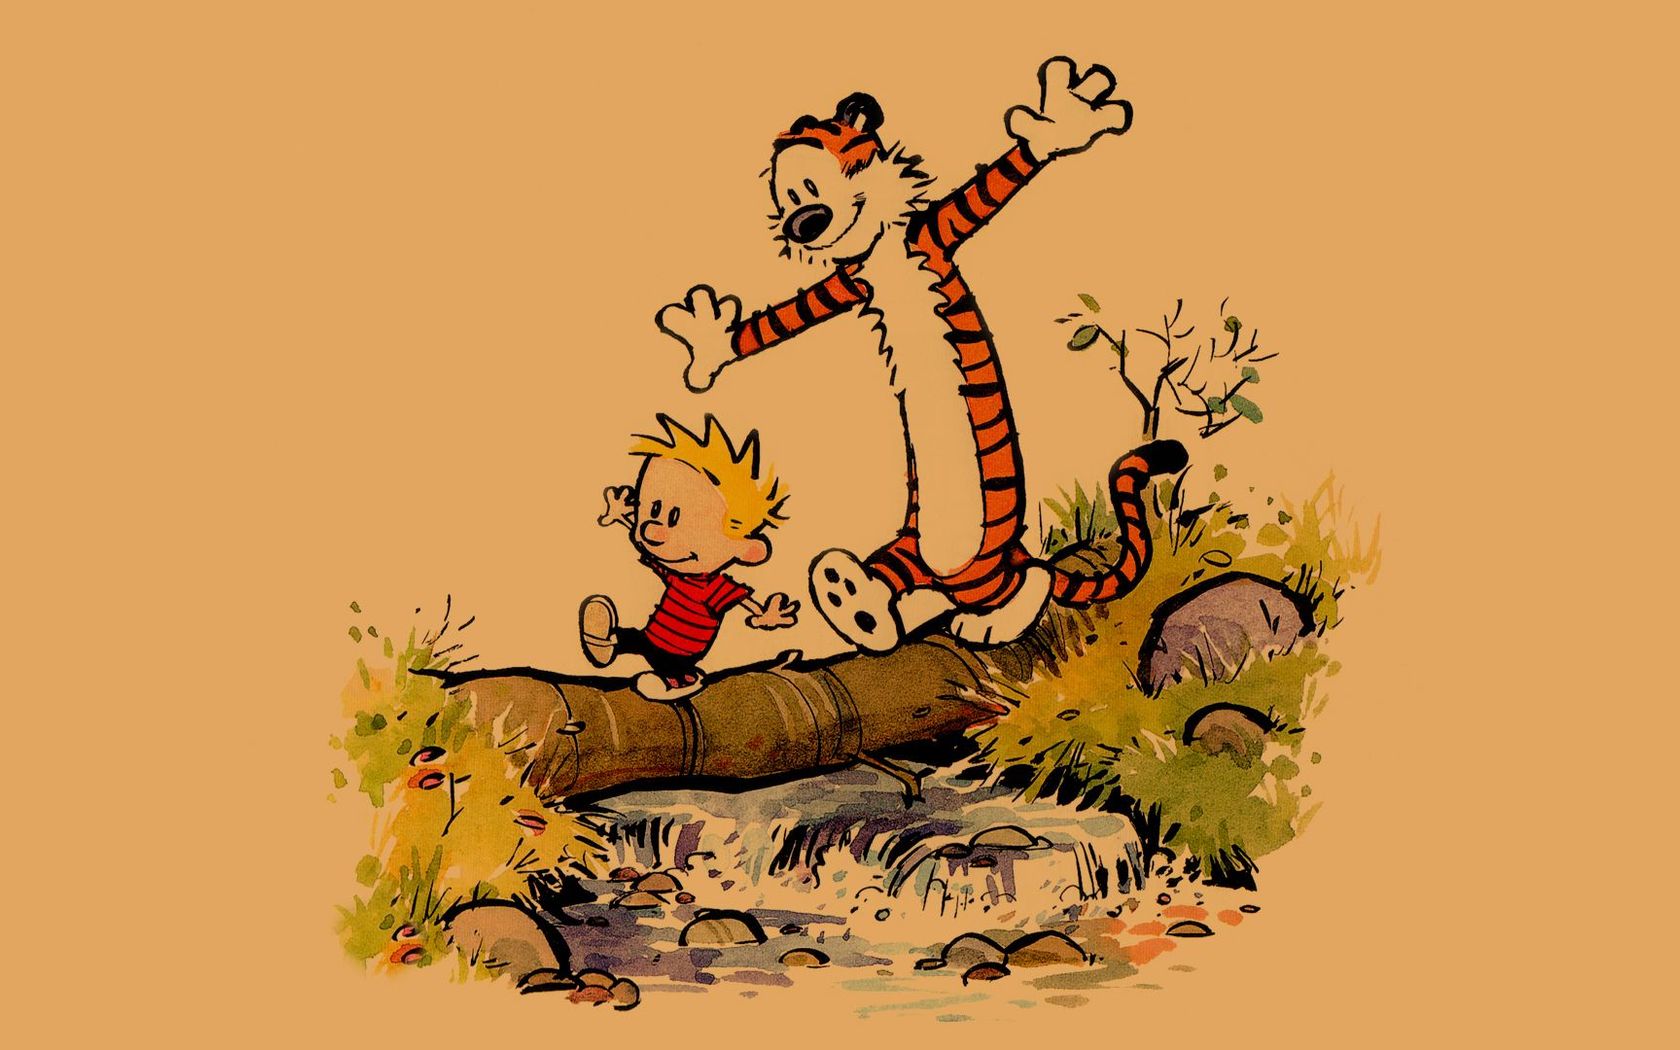 Download Calvin and Hobbes wallpaper